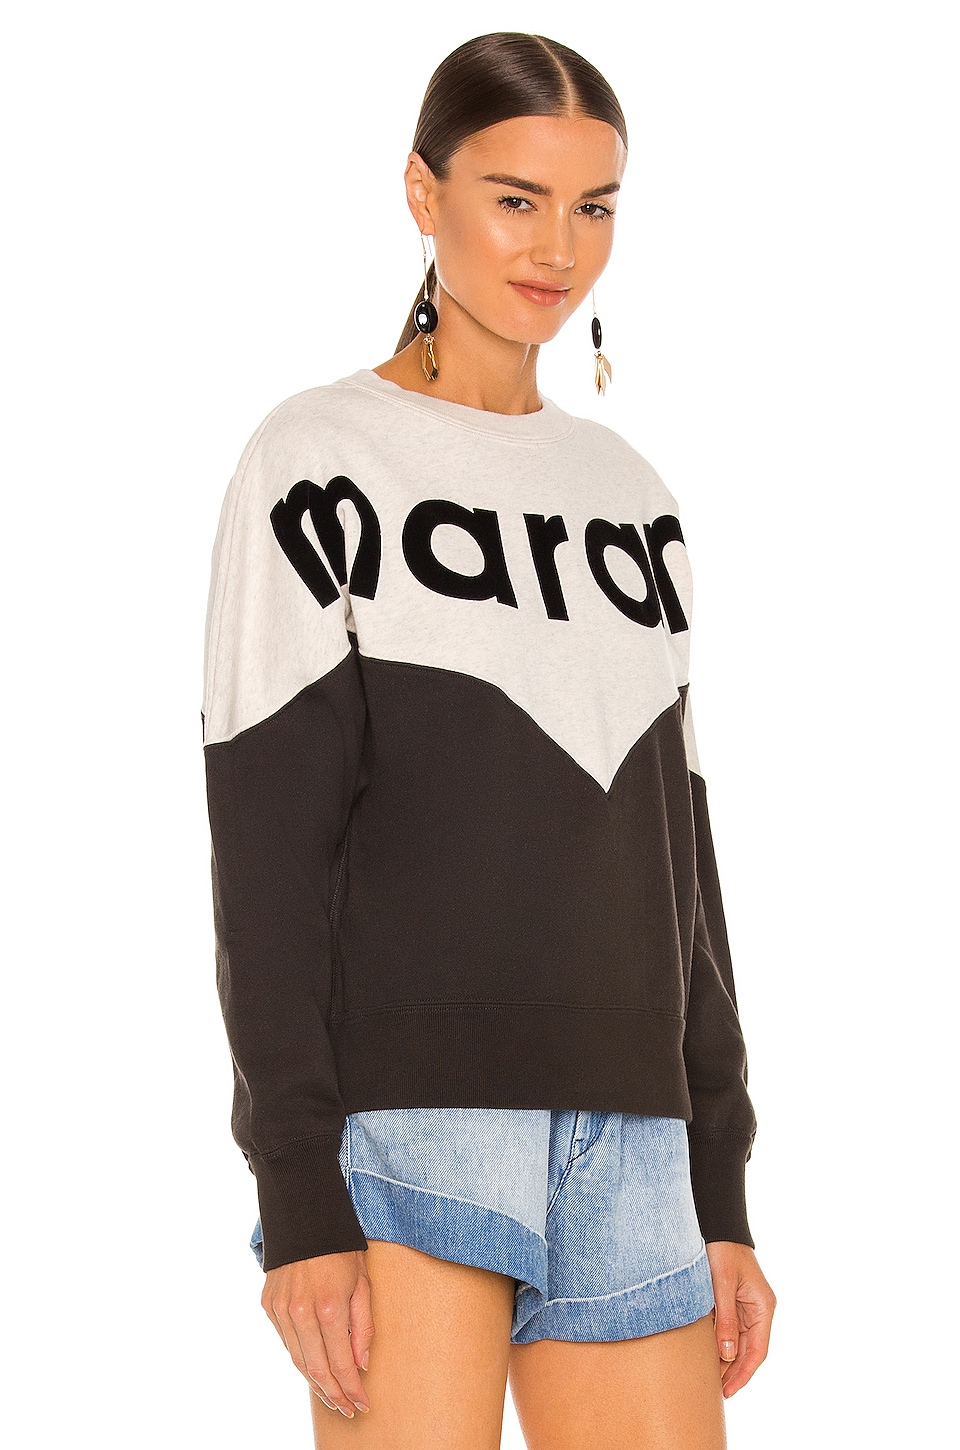 Isabel Marant Etoile Houston Sweatshirt in Faded Black | REVOLVE